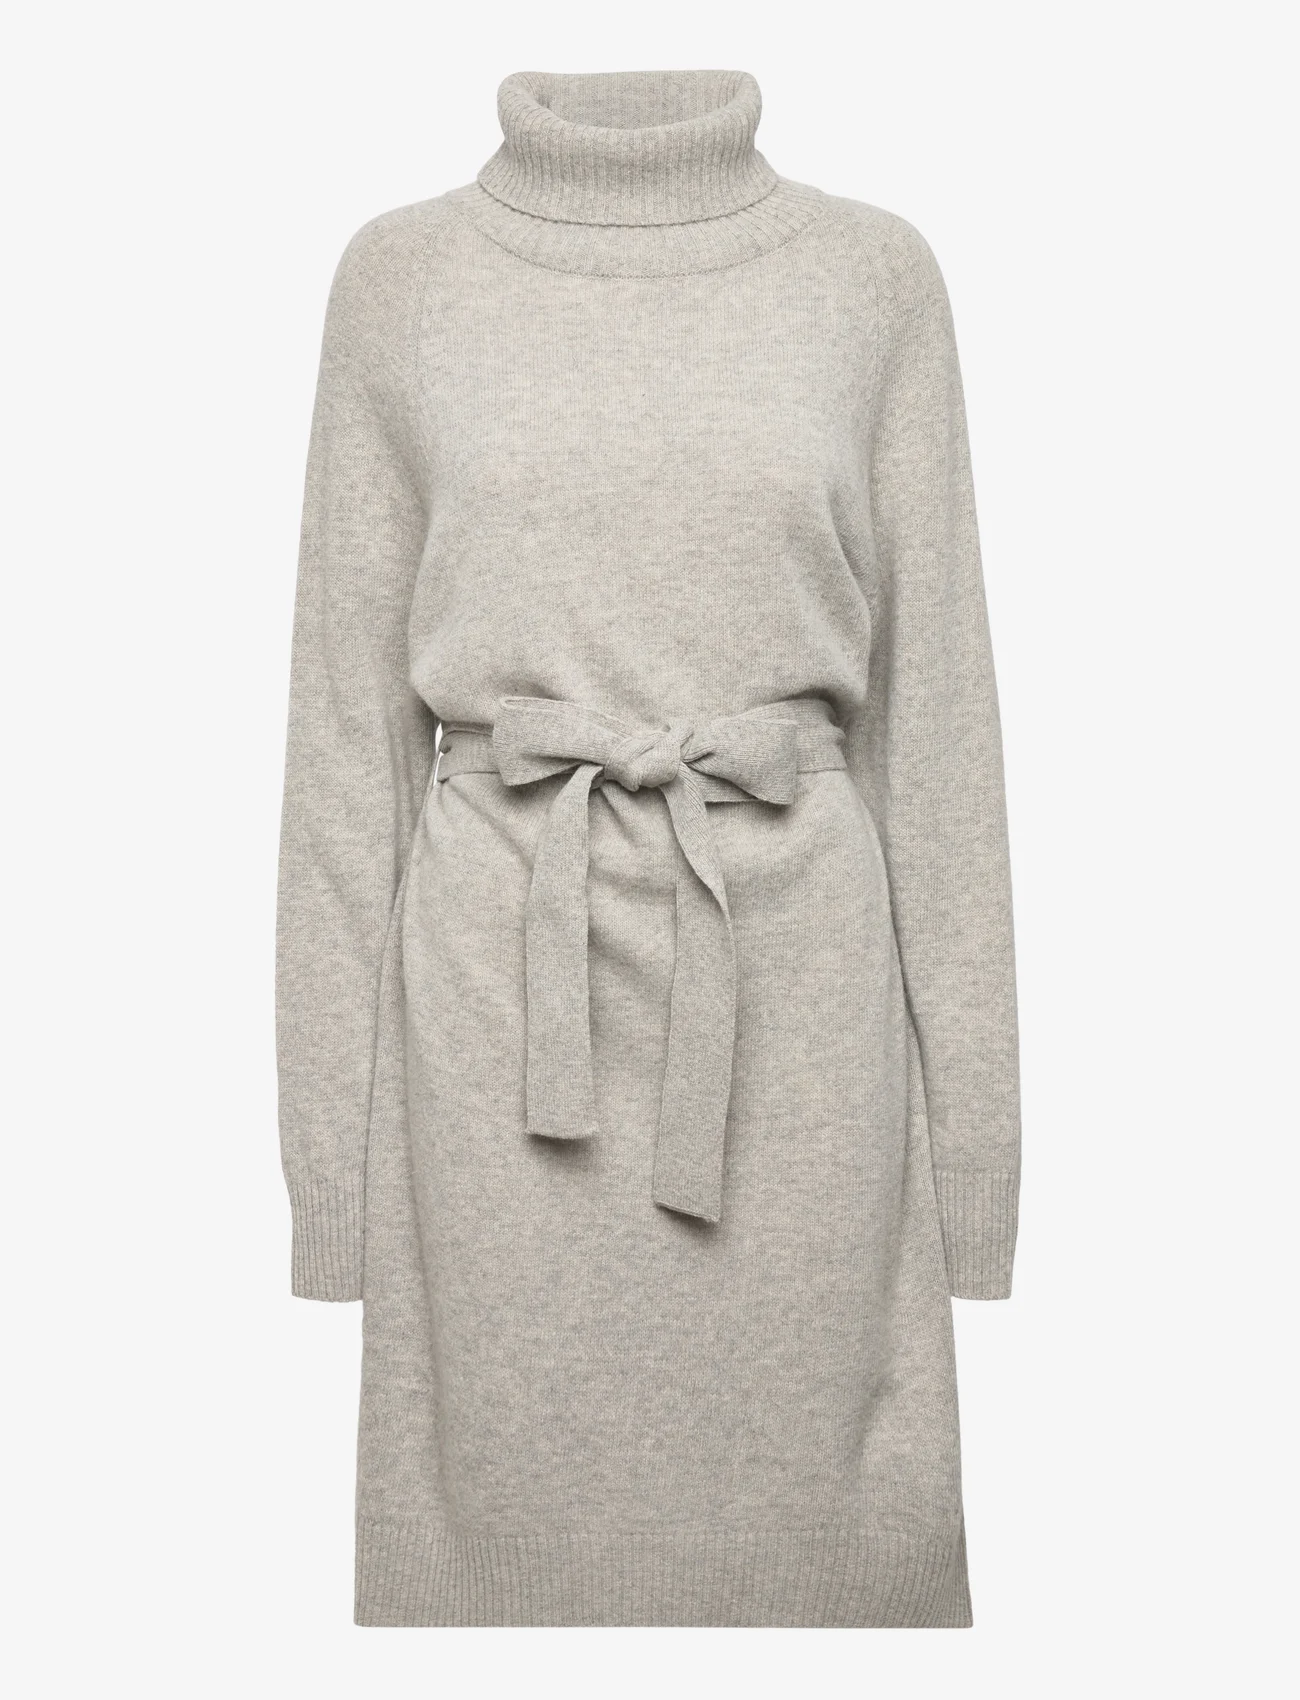 IVY OAK - Mini Knit Dress - knitted dresses - oyster grey melange - 0